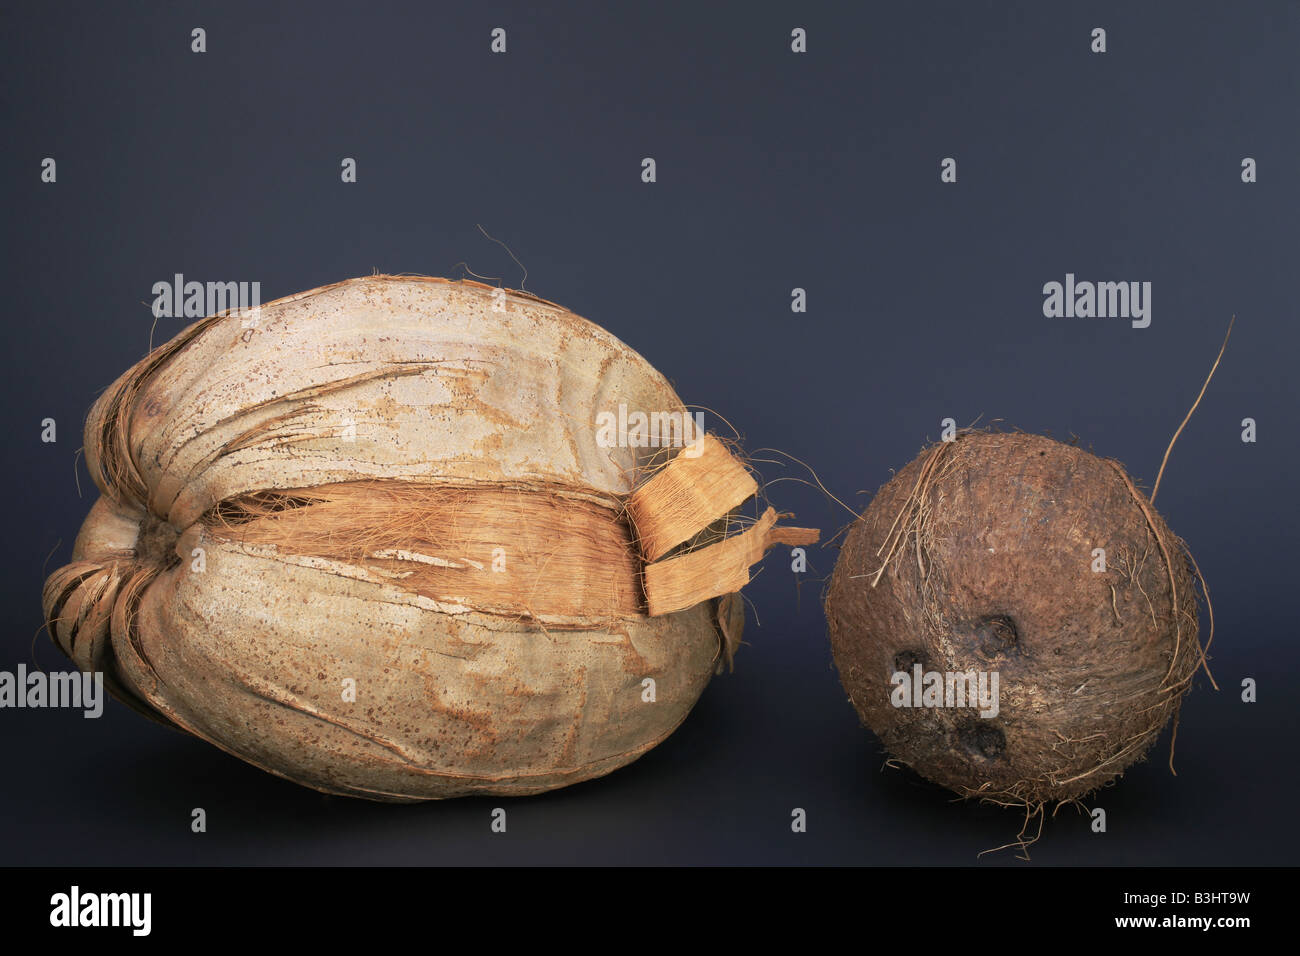 Cocos nucifera, coconut palm Stock Photo